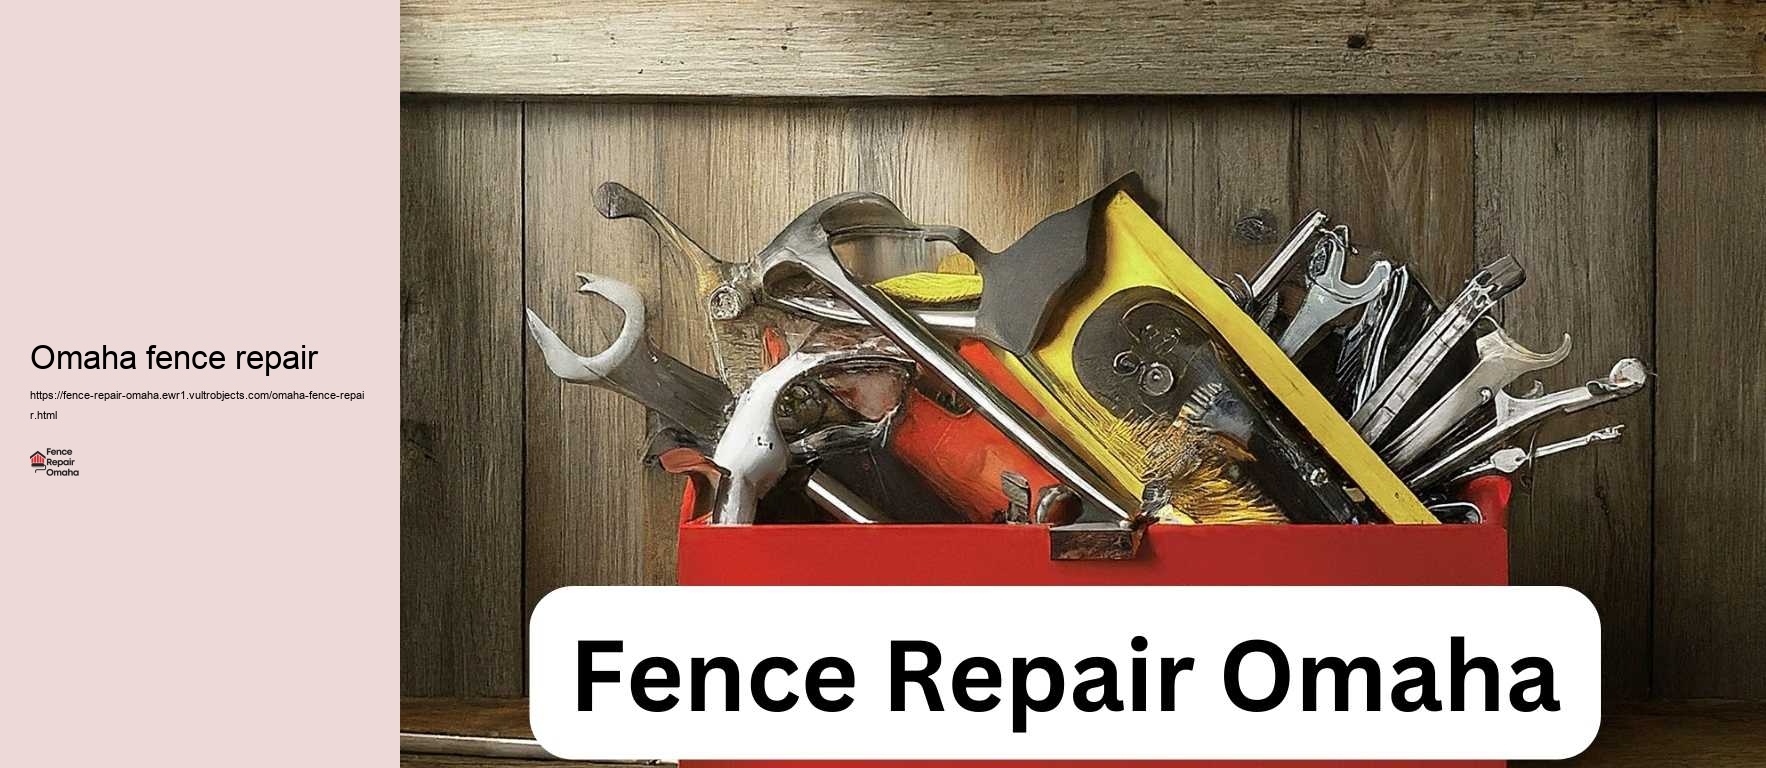 Omaha fence repair